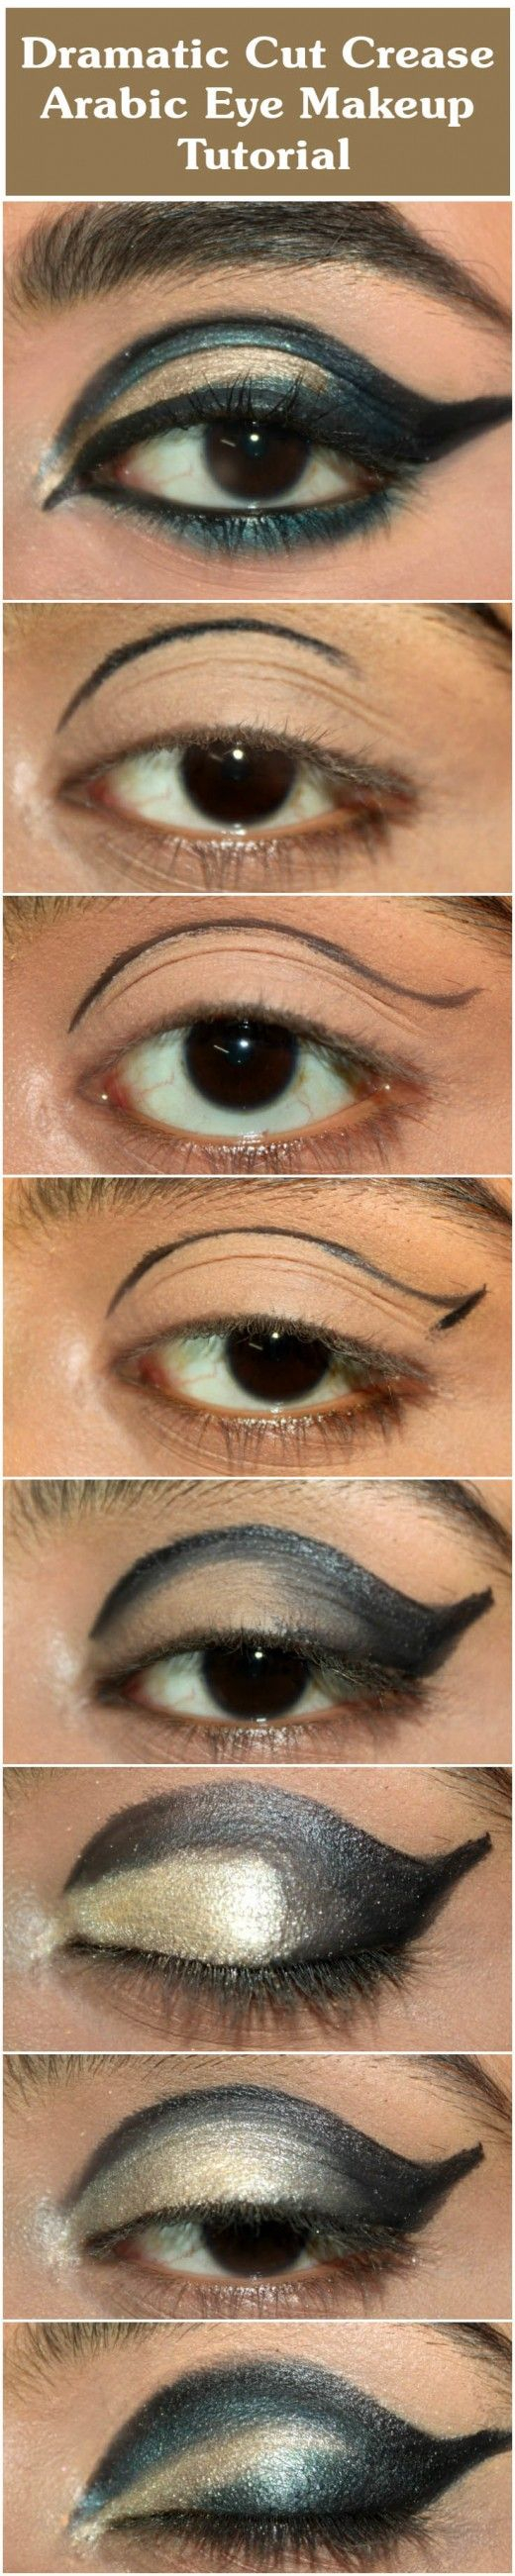 Arabic Eyes Makeup Pics Dramatic Cut Crease Arabic Eye Makeup Tutorial Chikk